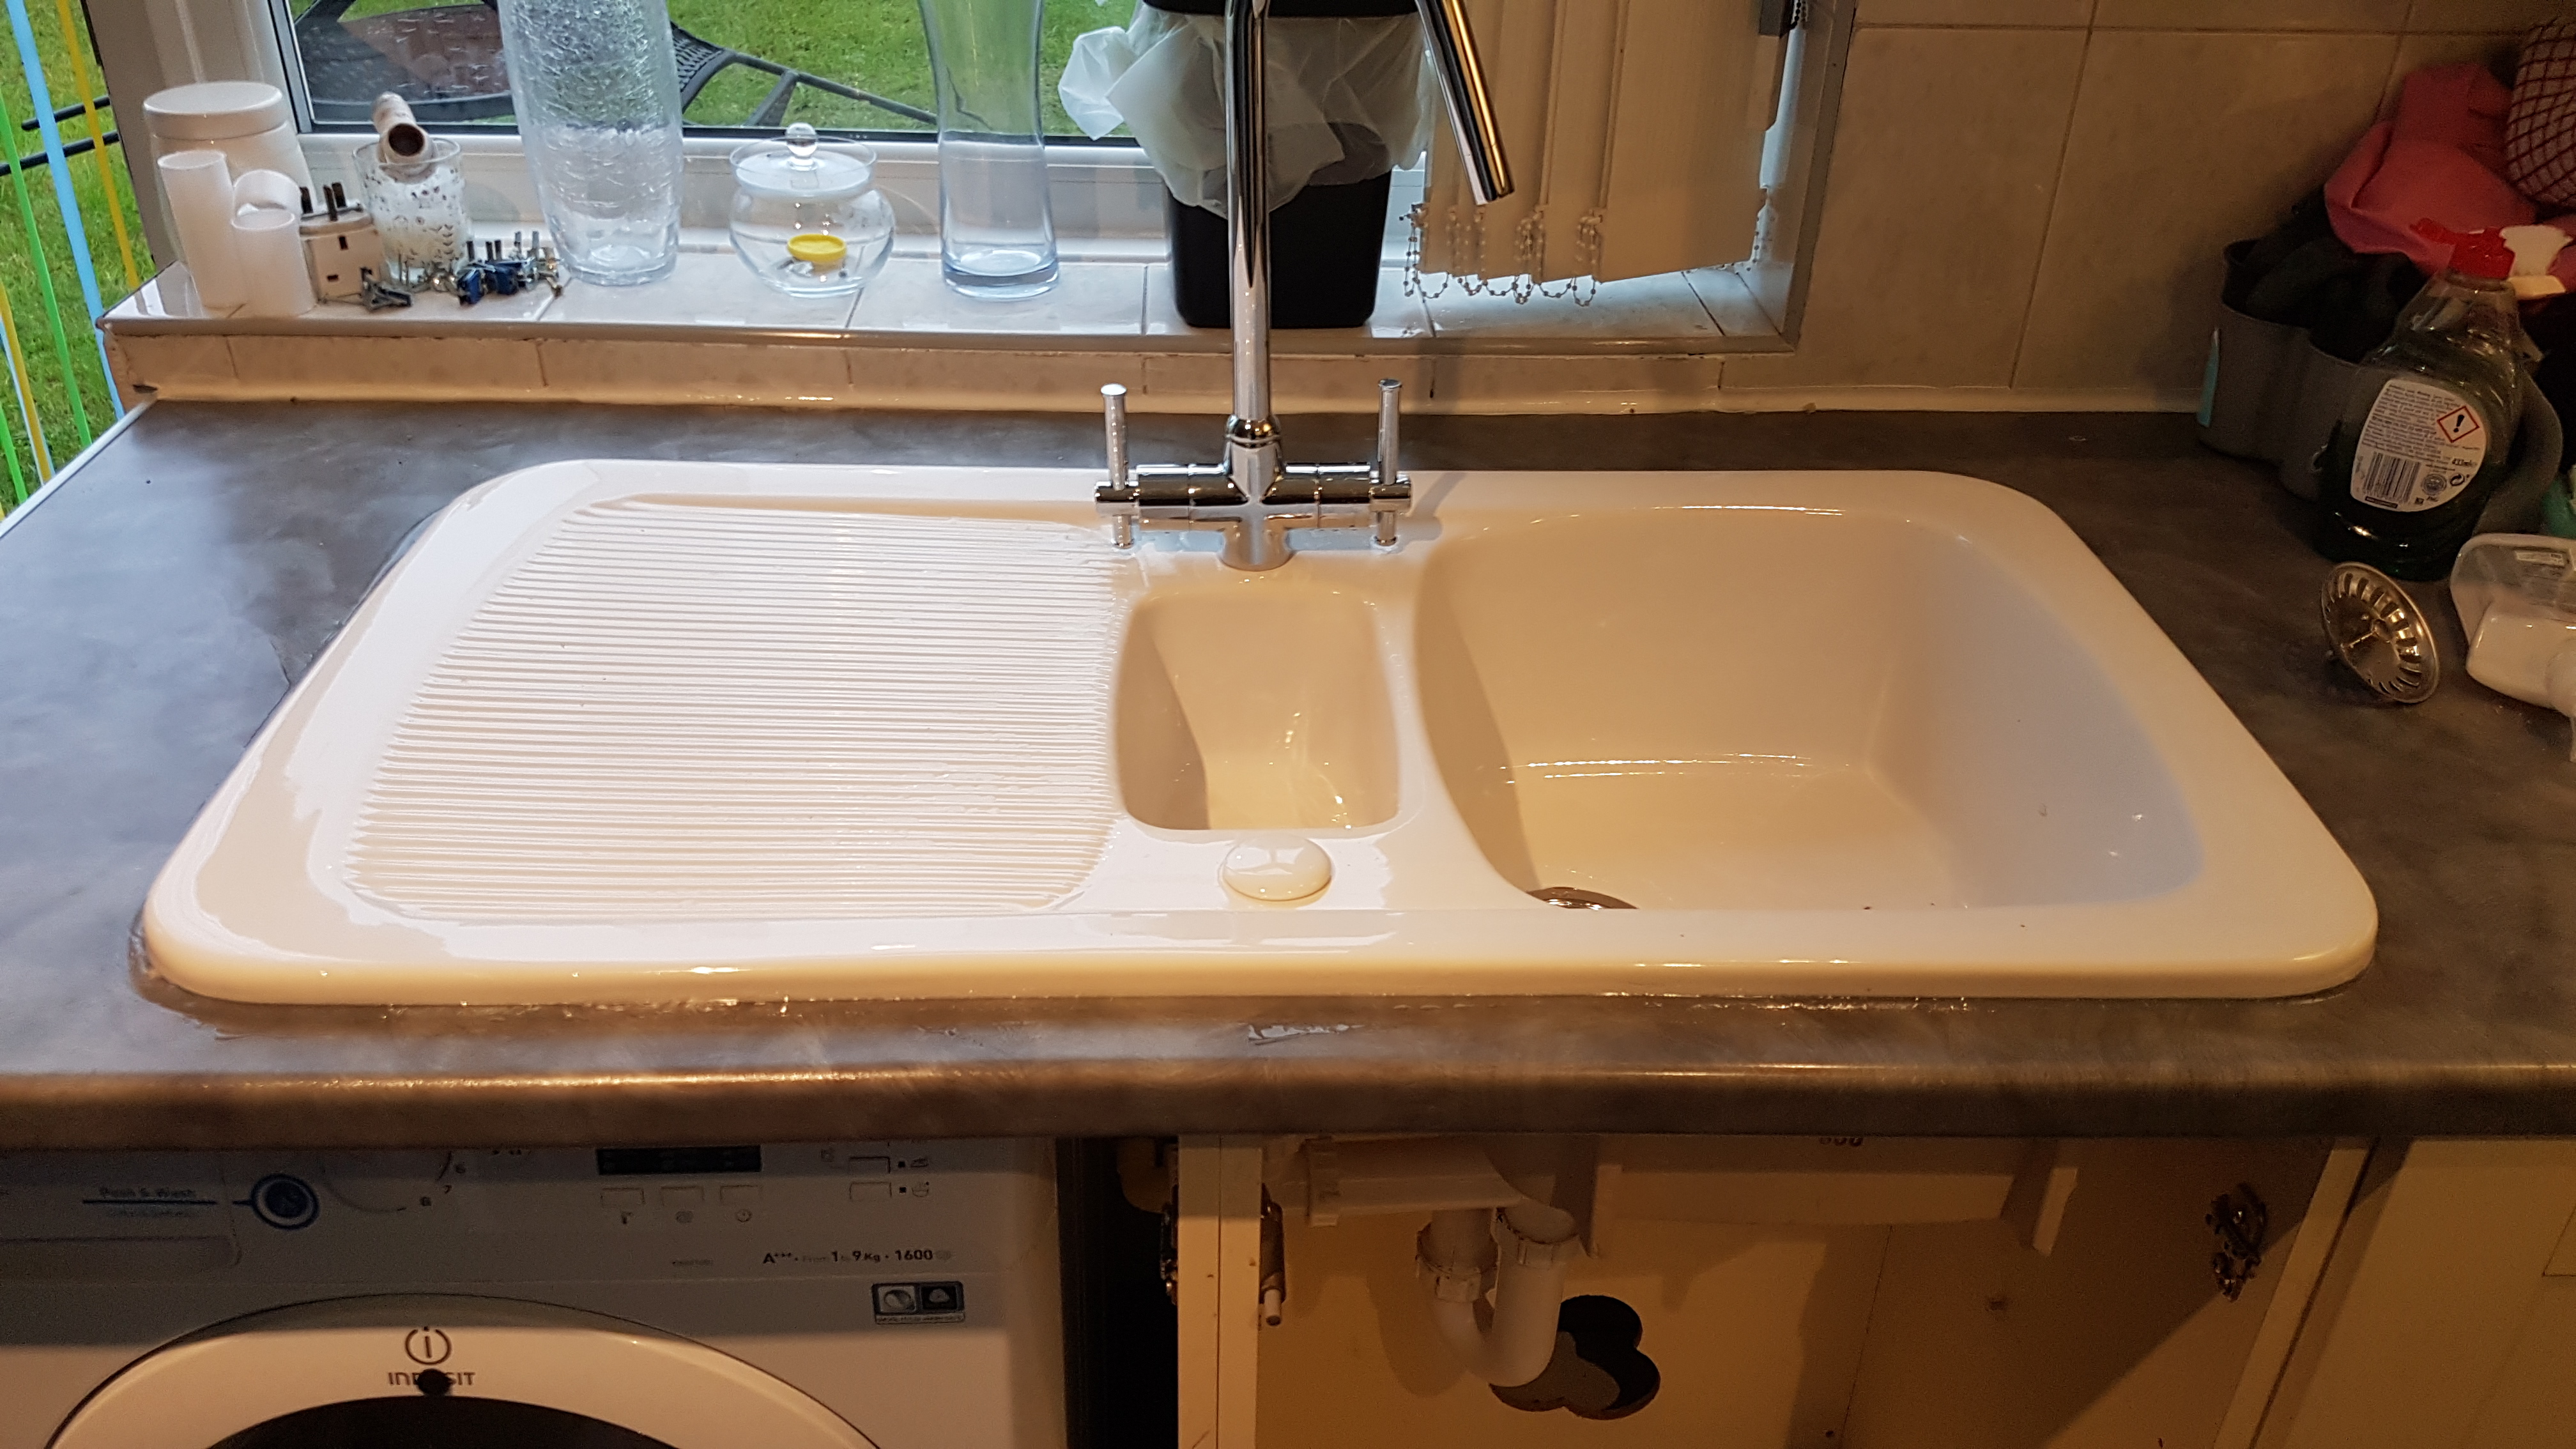 Ceramic kitchen sink and mixer tap